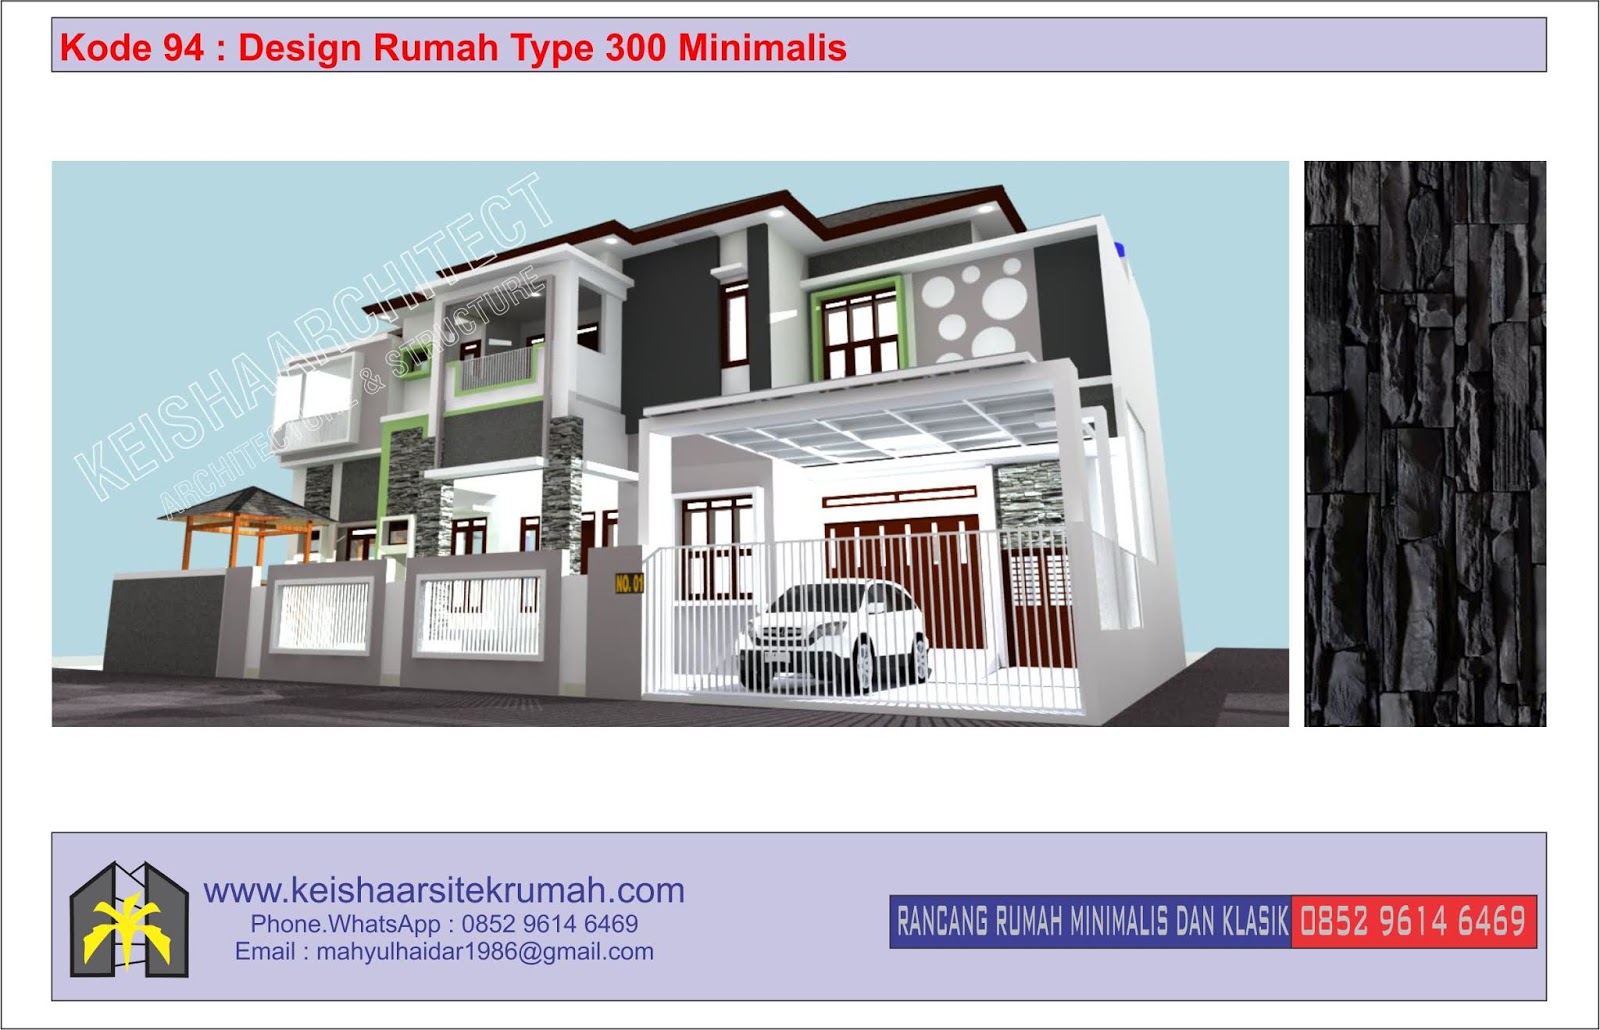 Kode 94 Design Rumah Minimalis Tropis Lokasi Kalimantan